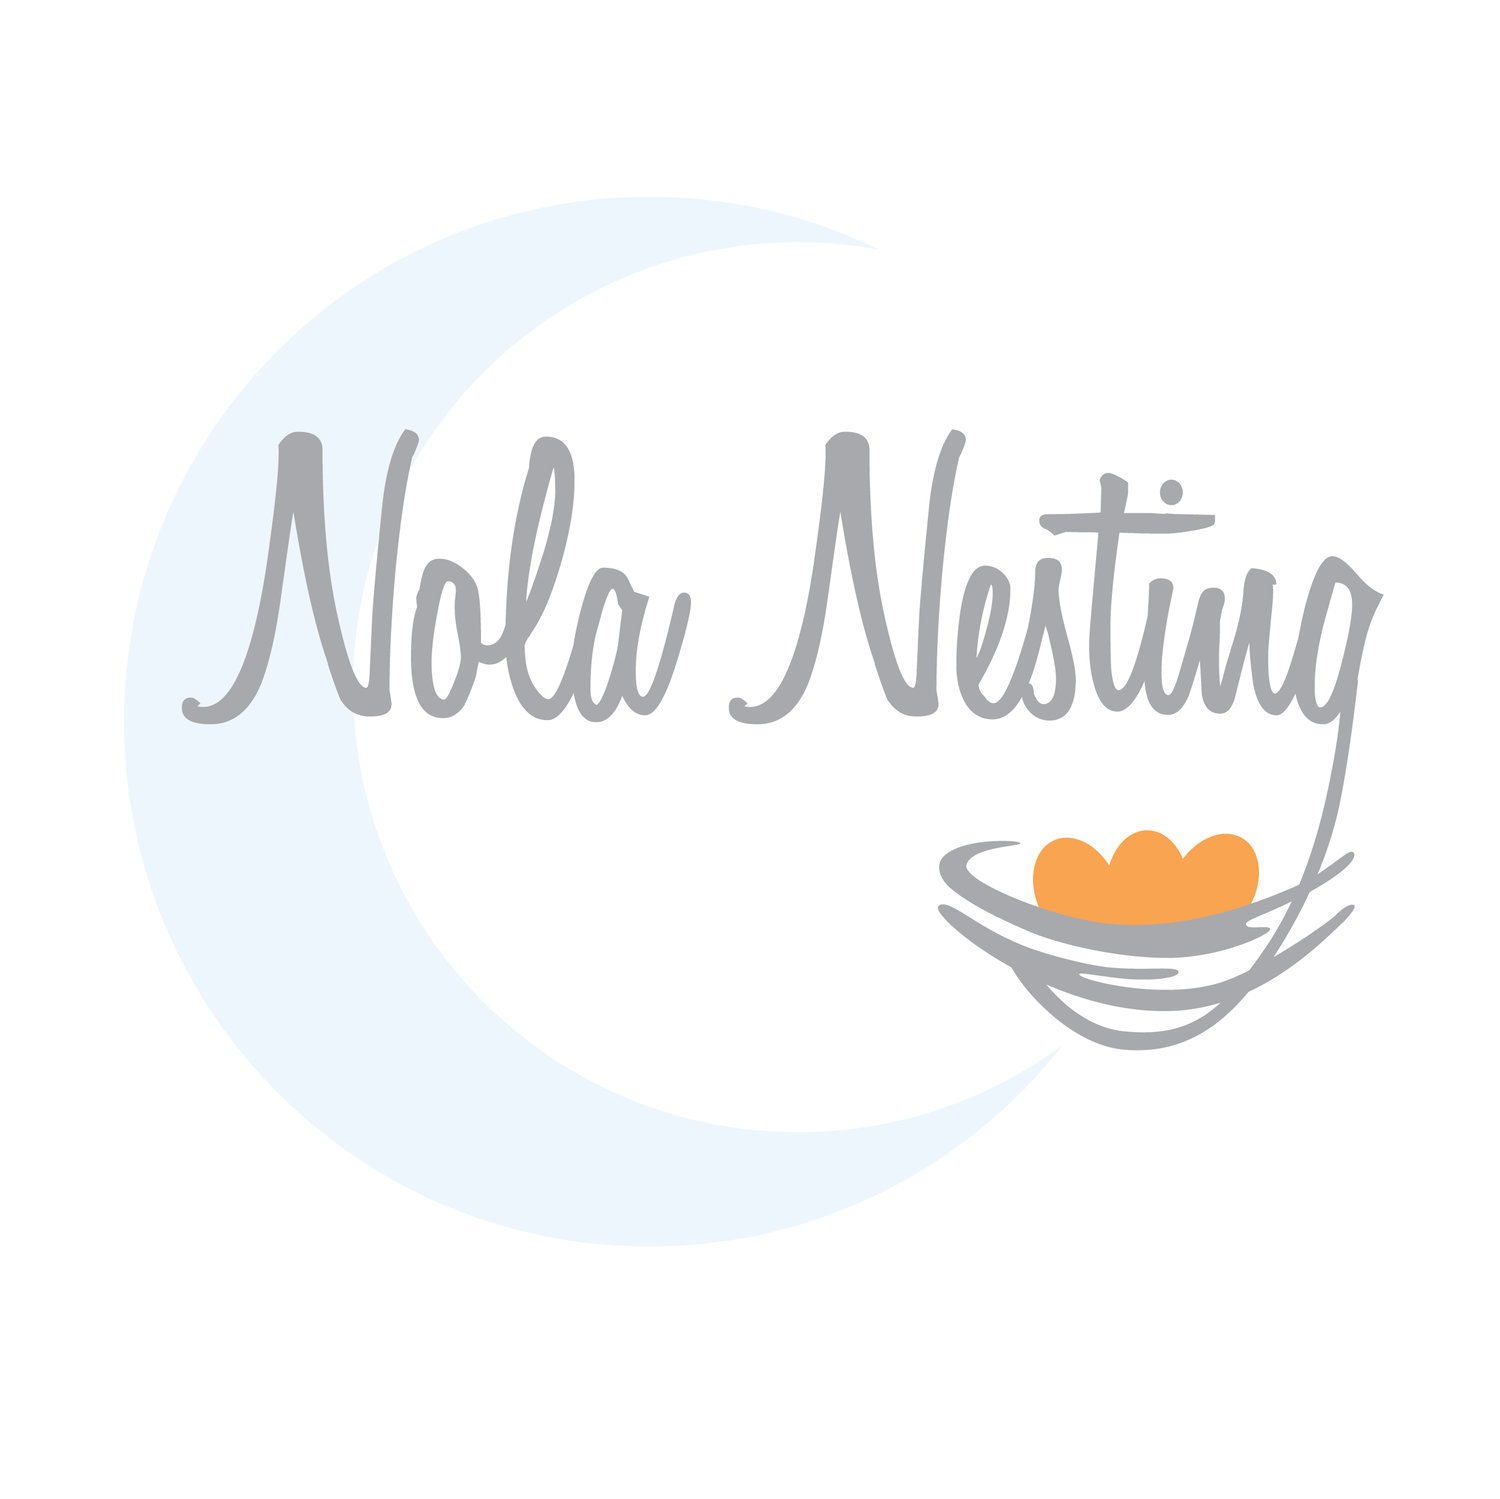 Nola Nesting